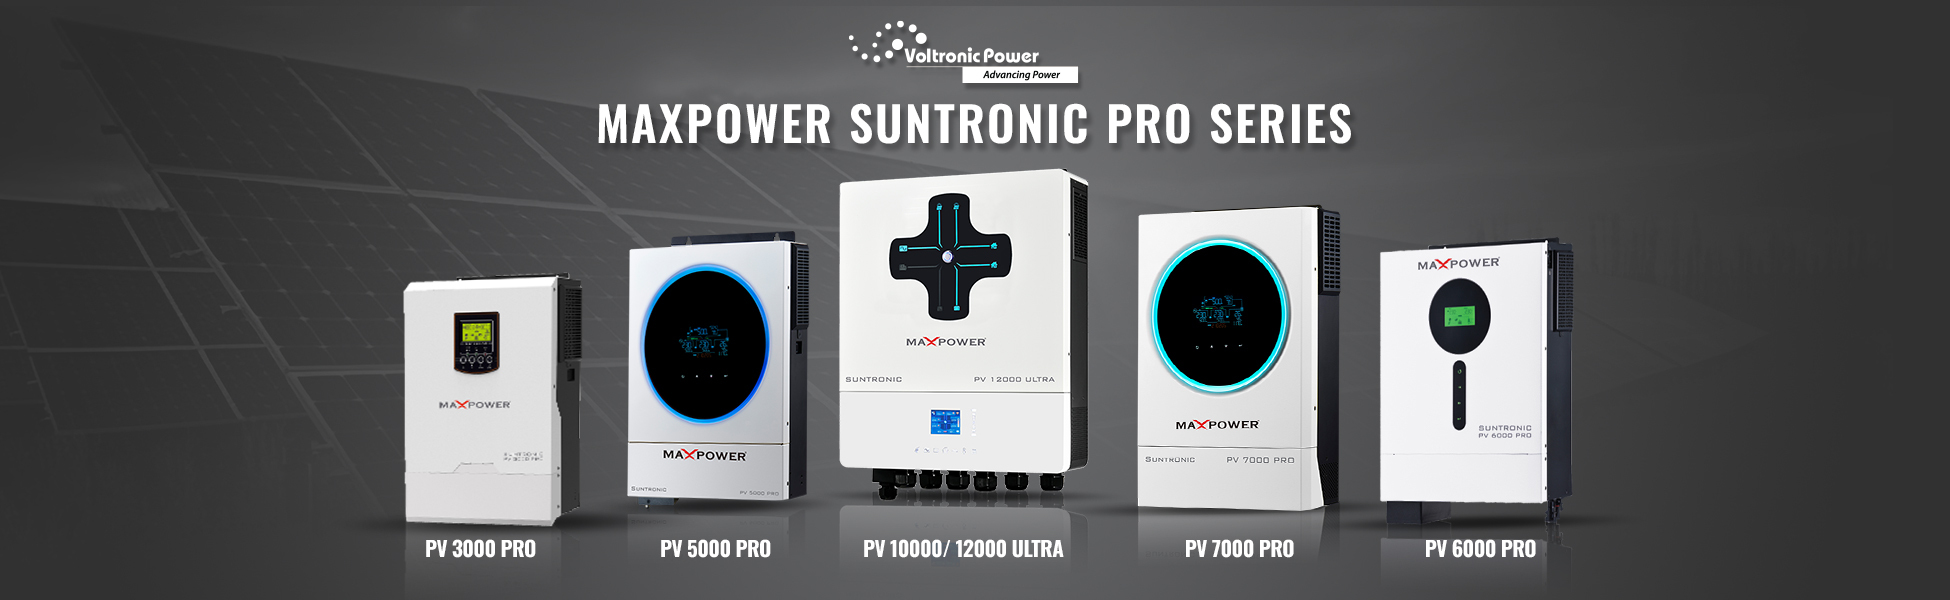 MaxPower Suntronic Pro Series